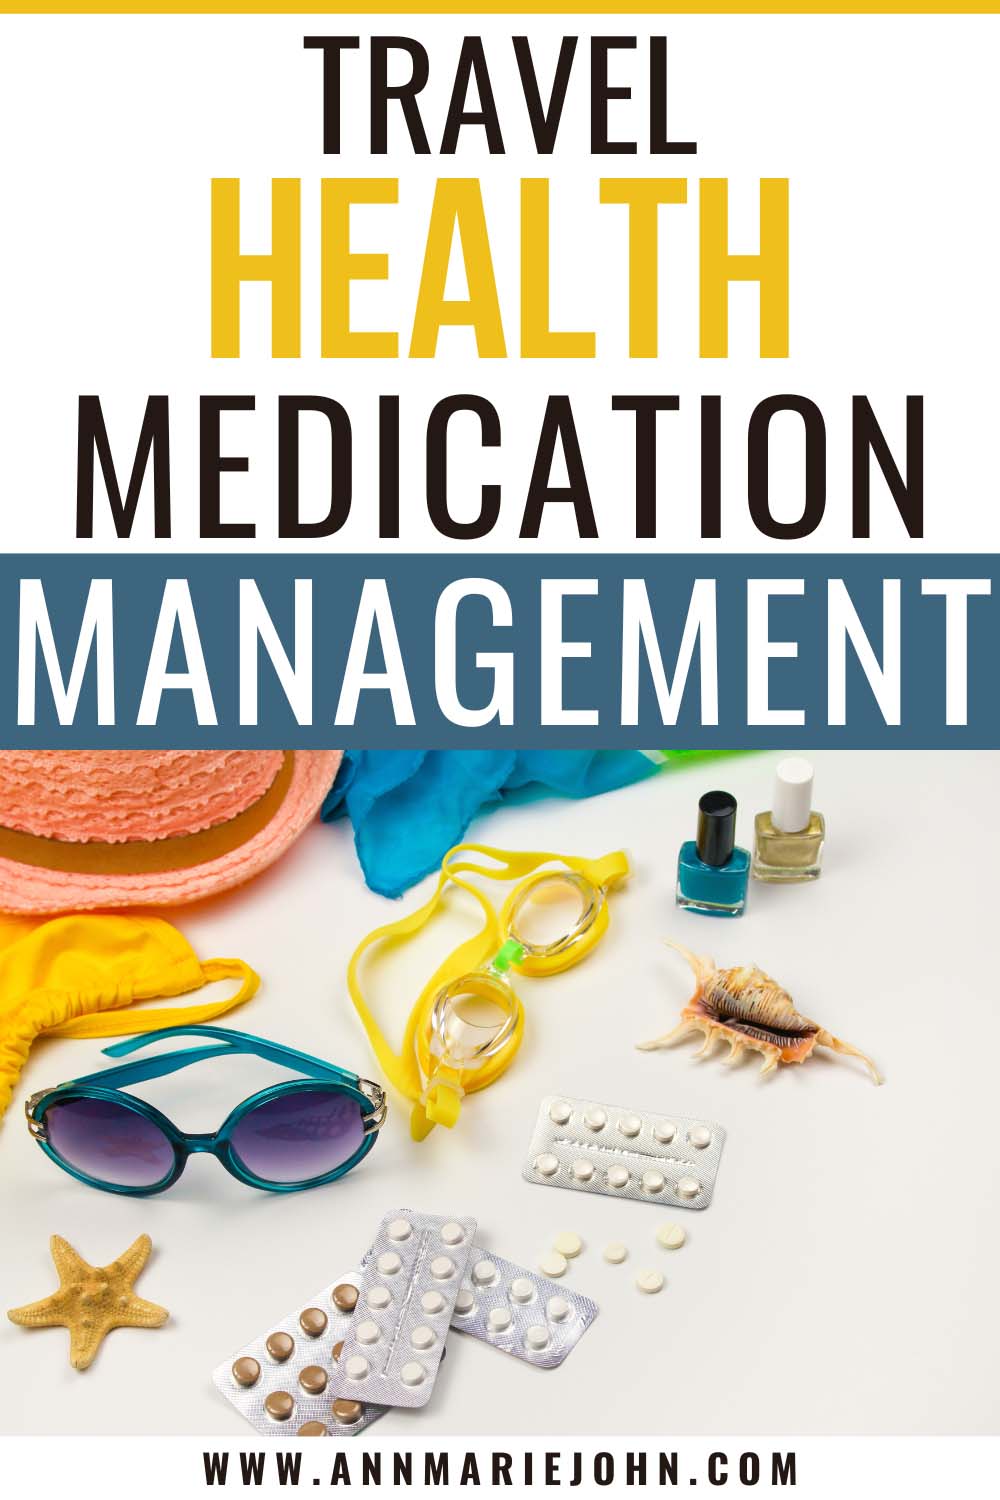 Travel Health Medication Management